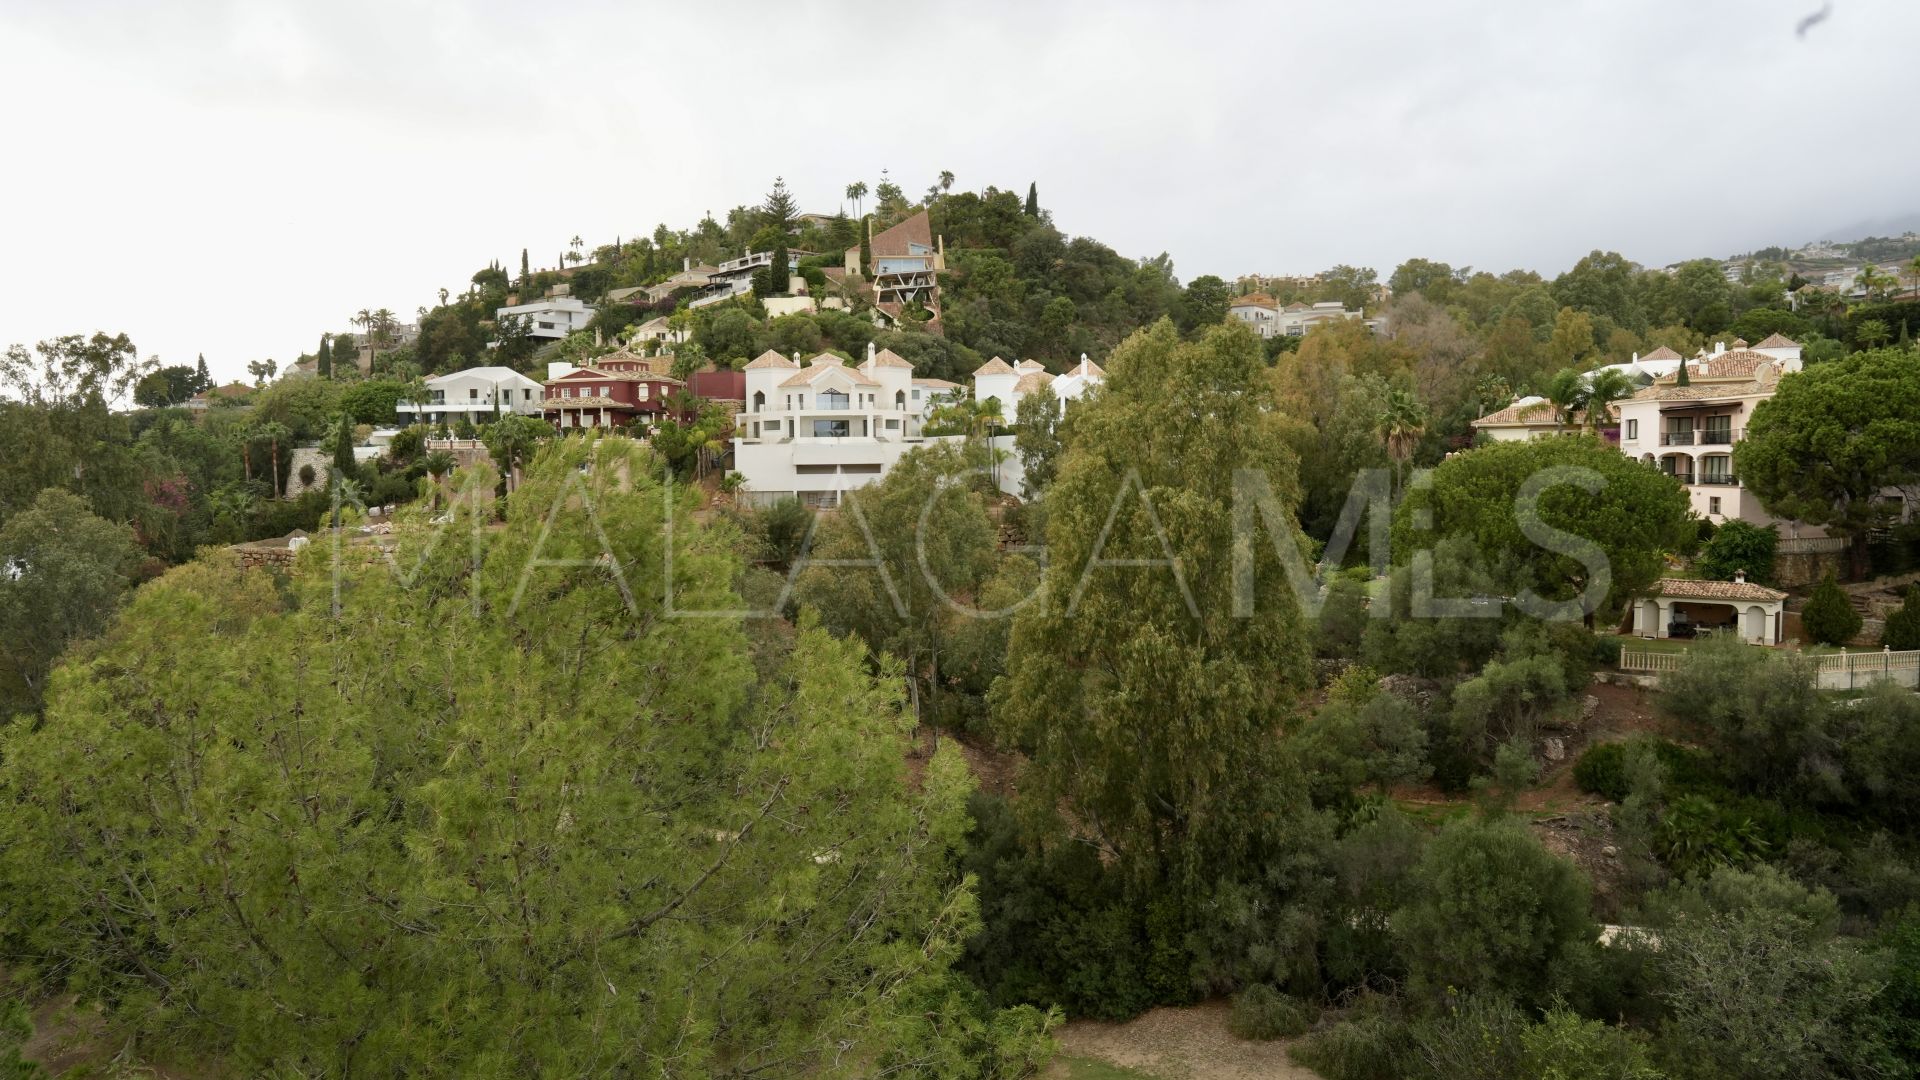 4 bedrooms semi detached house in La Quinta for sale